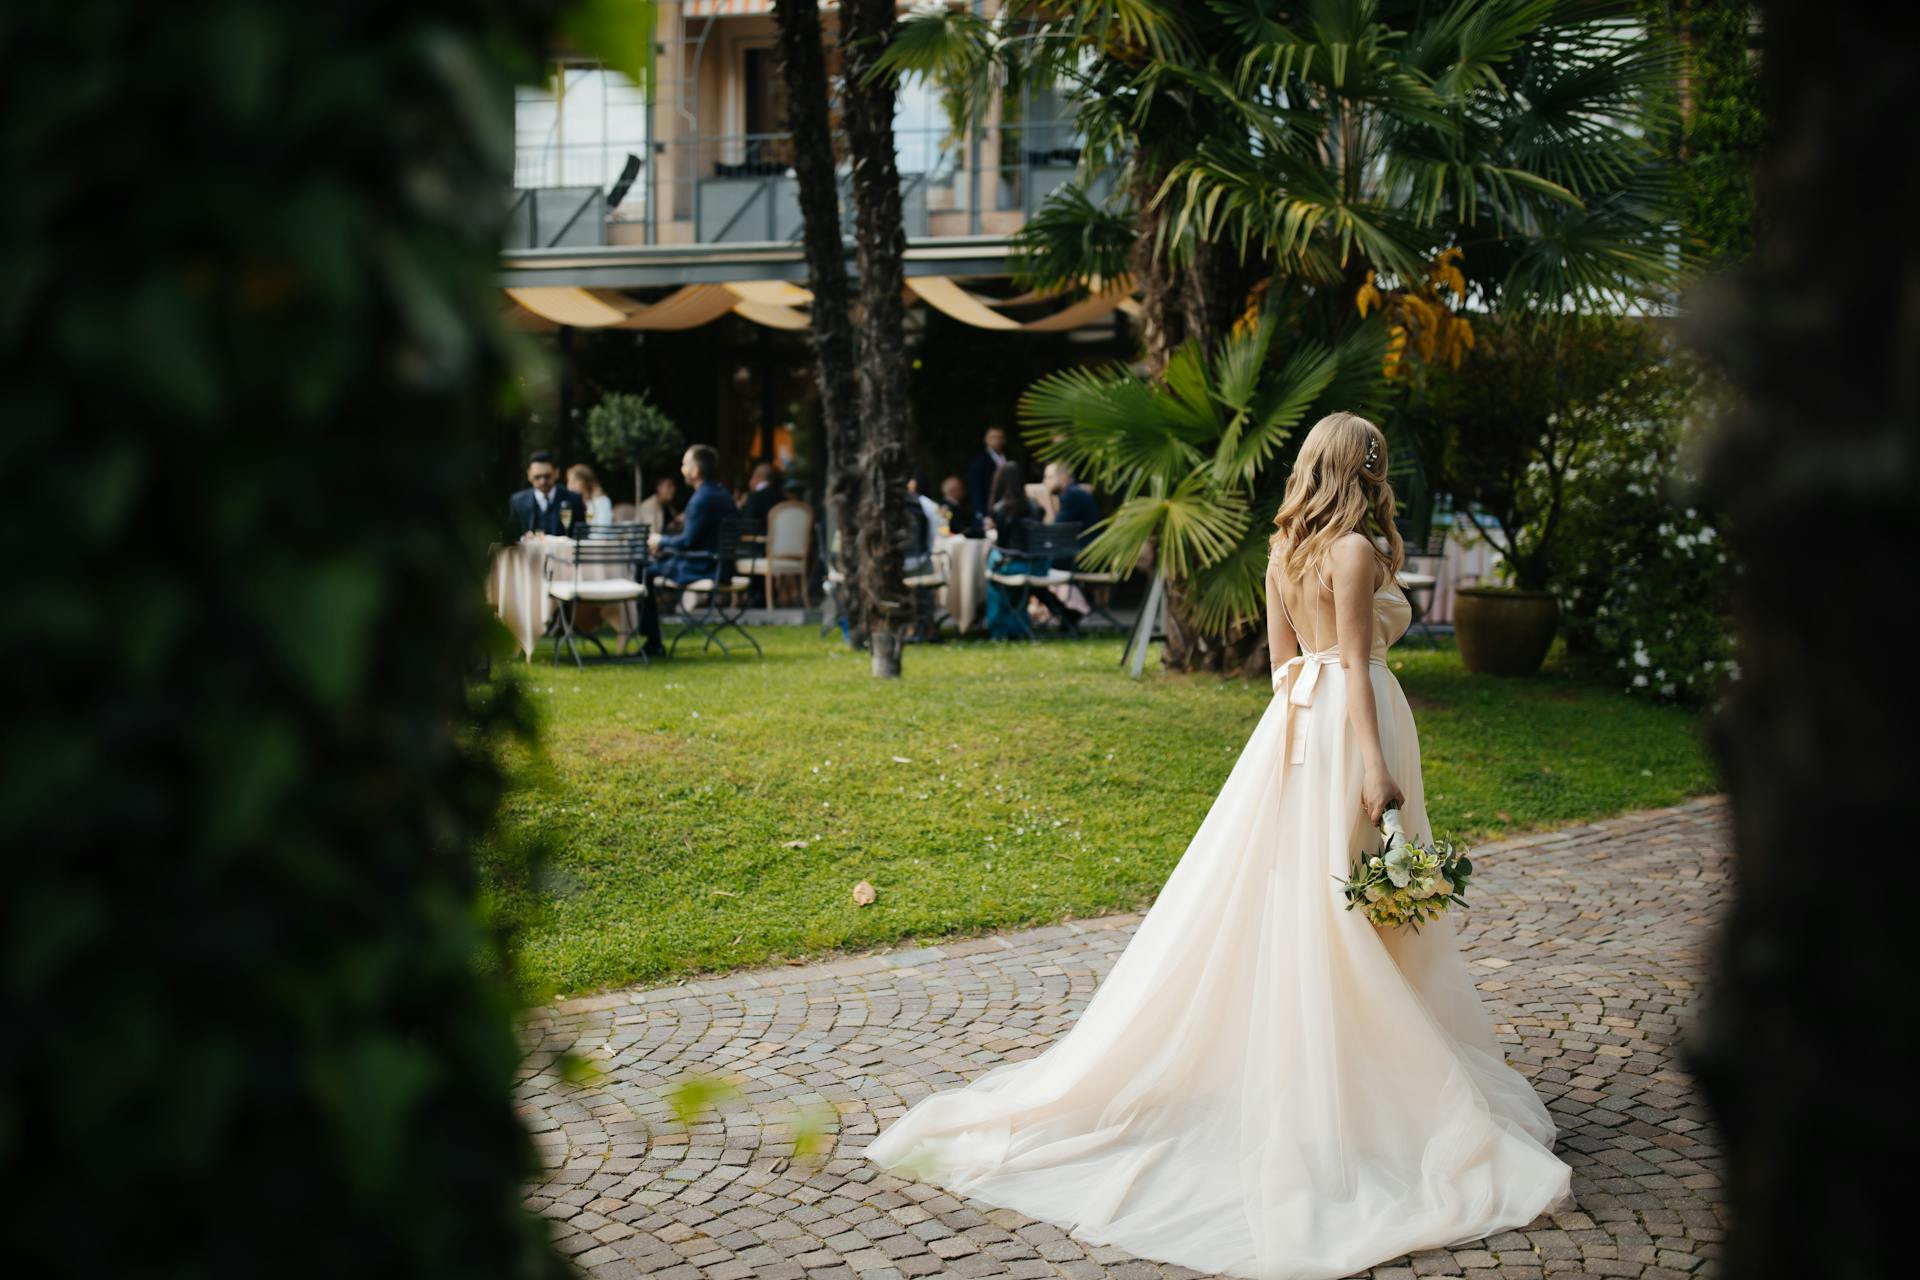 Bride walking along a path | Source: Pexels